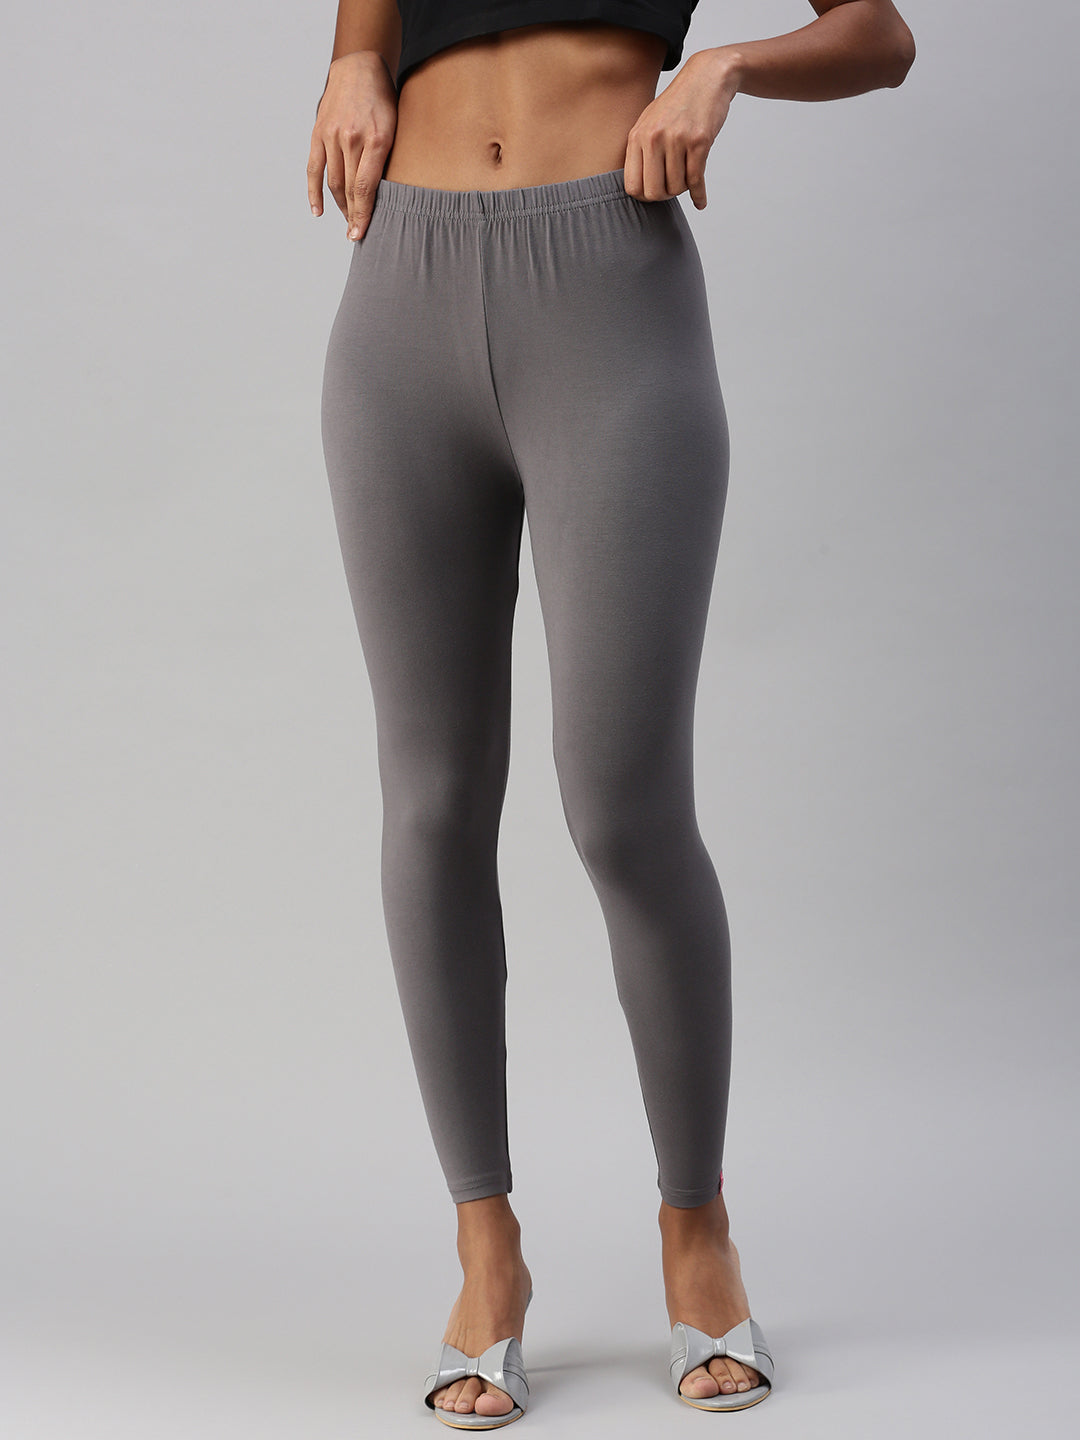 Buy Grey Leggings for Women by SUTI Online | Ajio.com